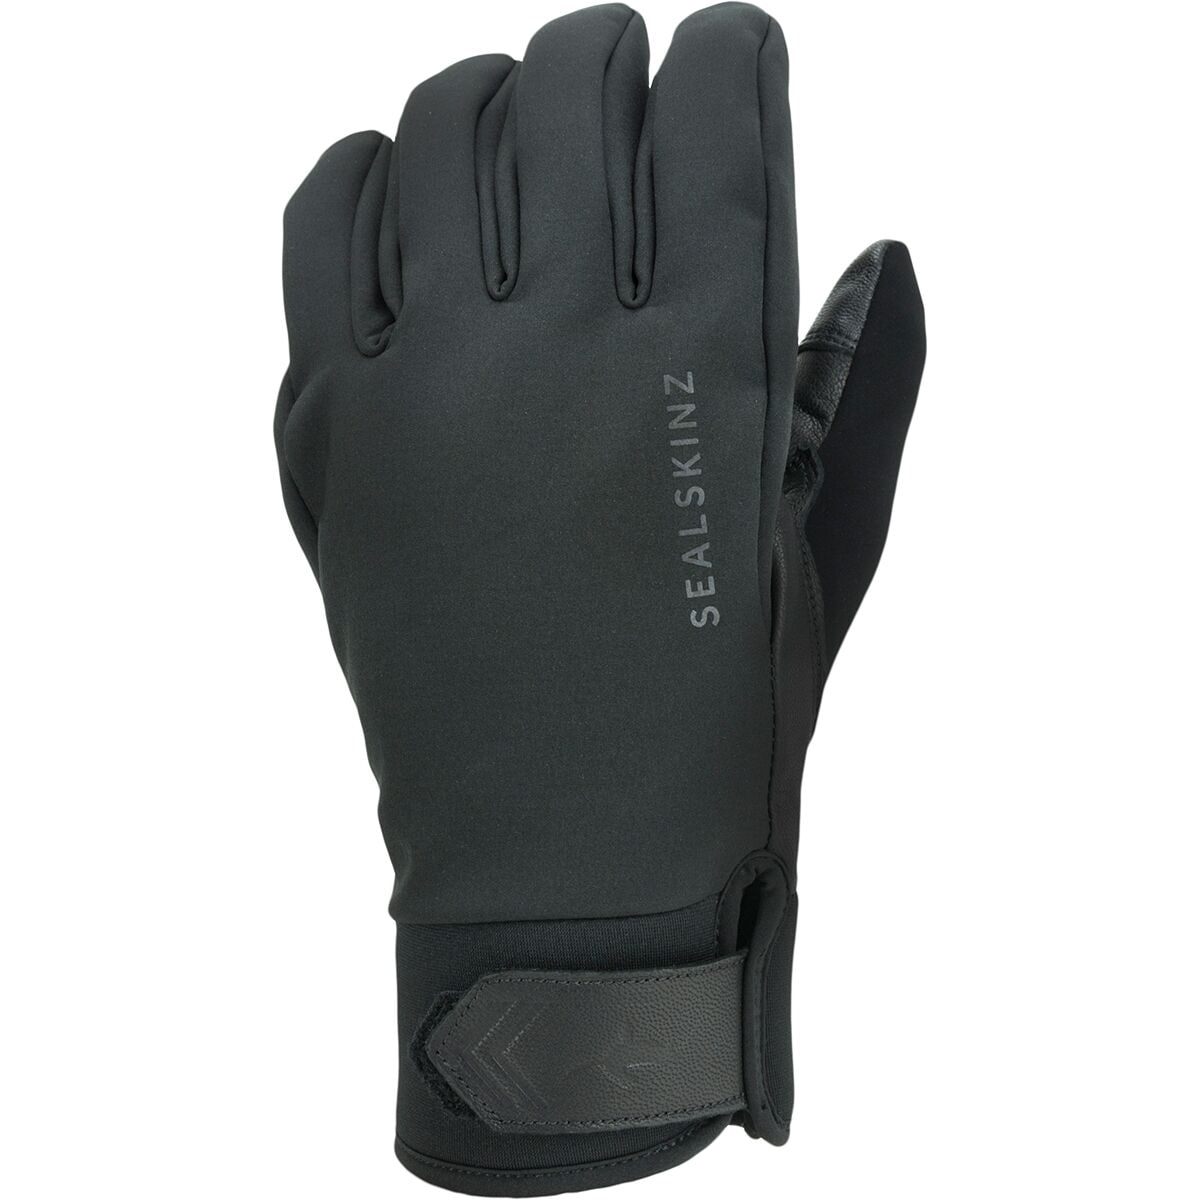 SealSkinz Waterproof All Weather Insulated Glove - Women's